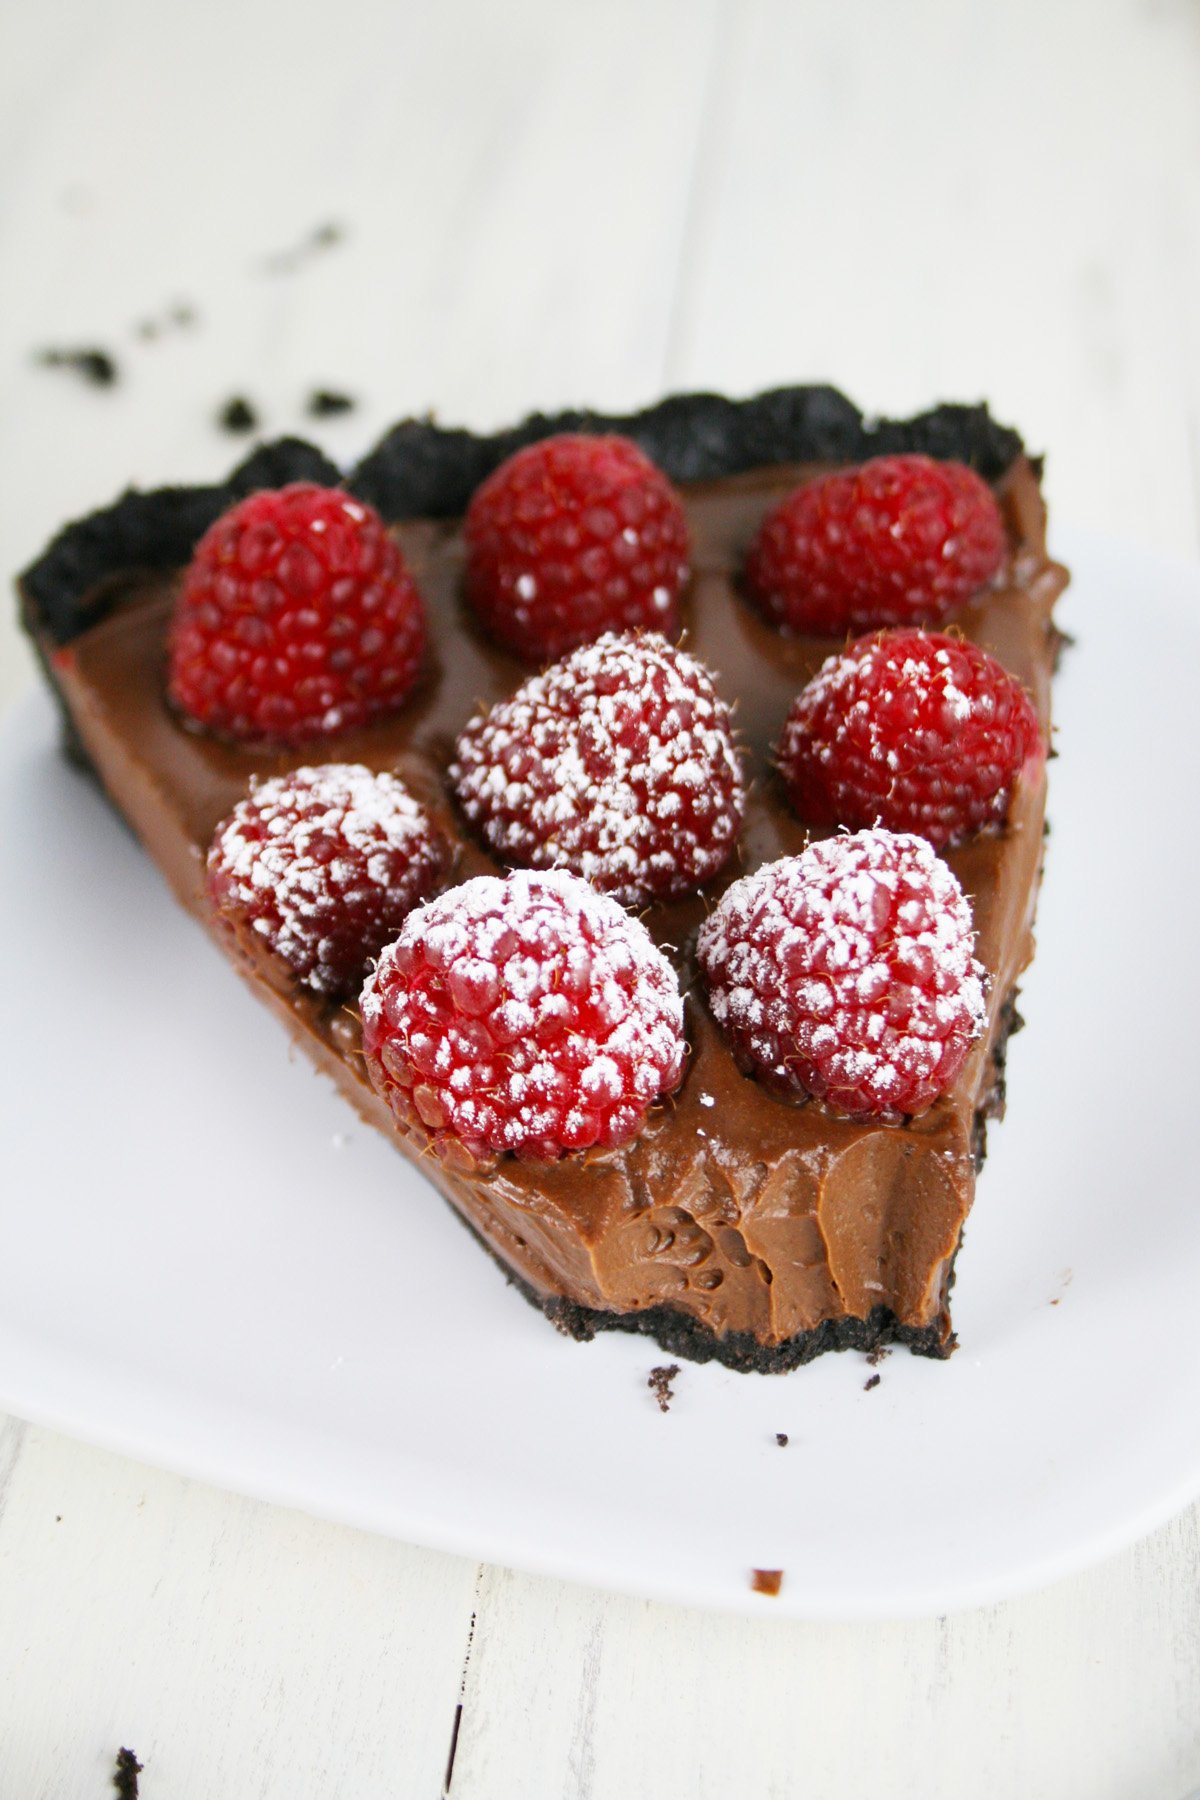 Slice of chocolate pie with raspberries on top.